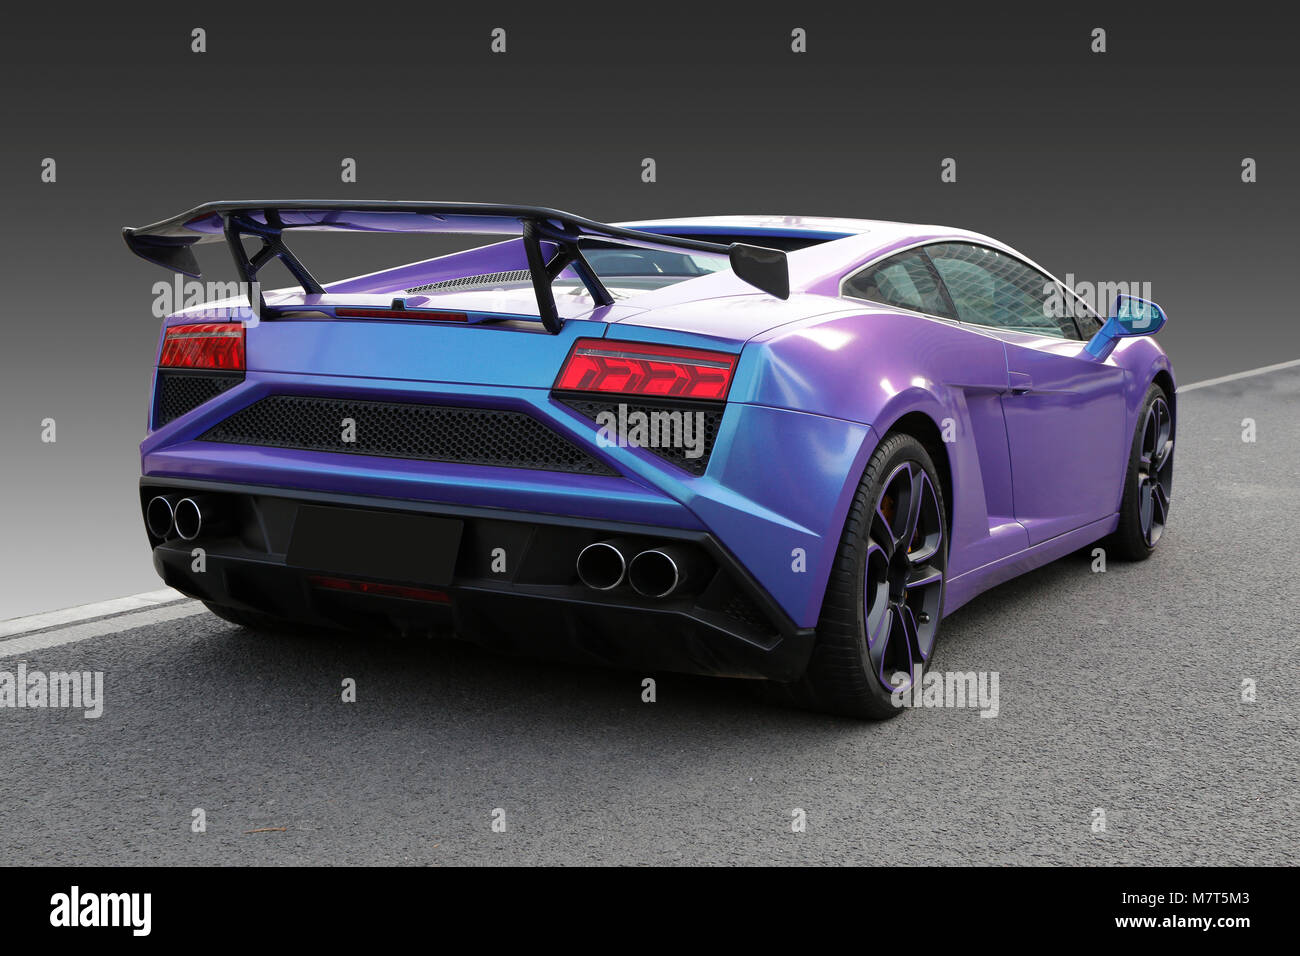 Lamborghini car Stock Photo